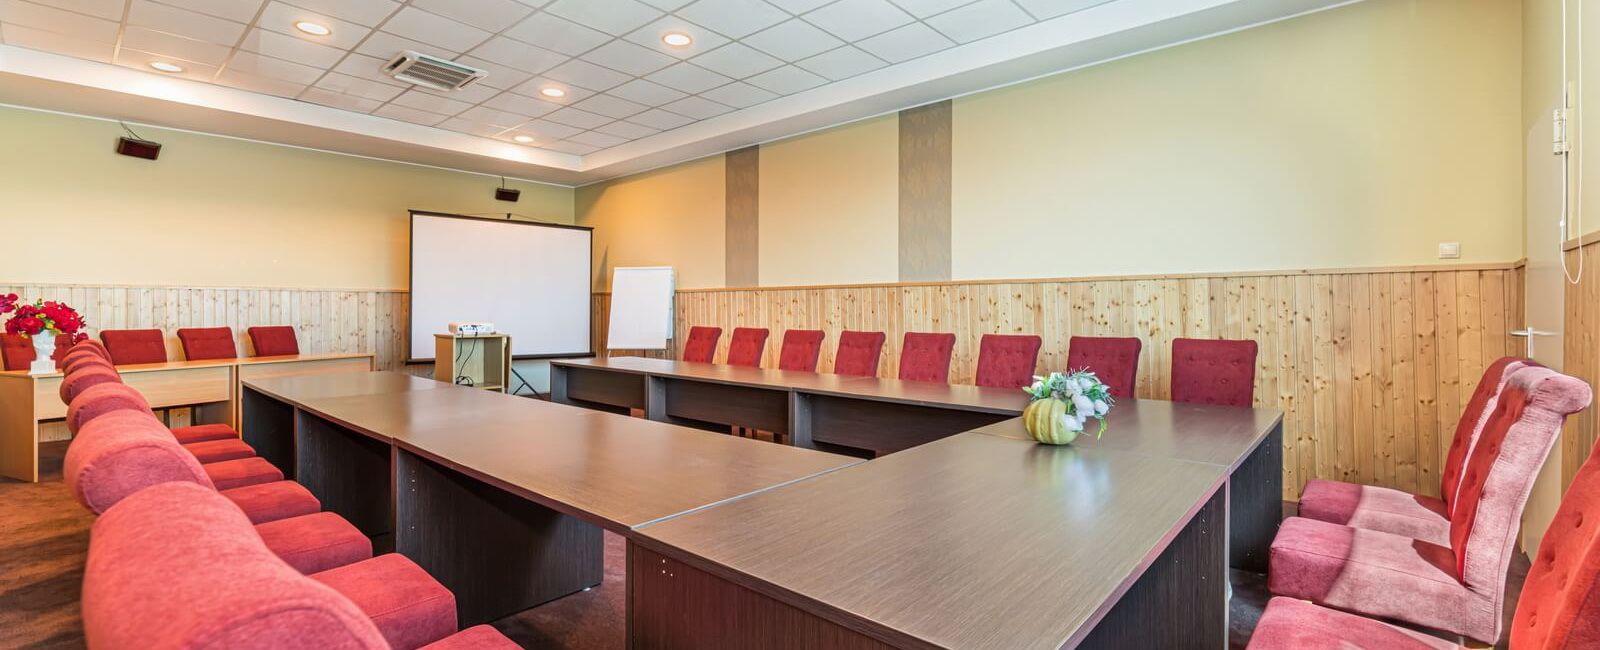 pegasus conference room